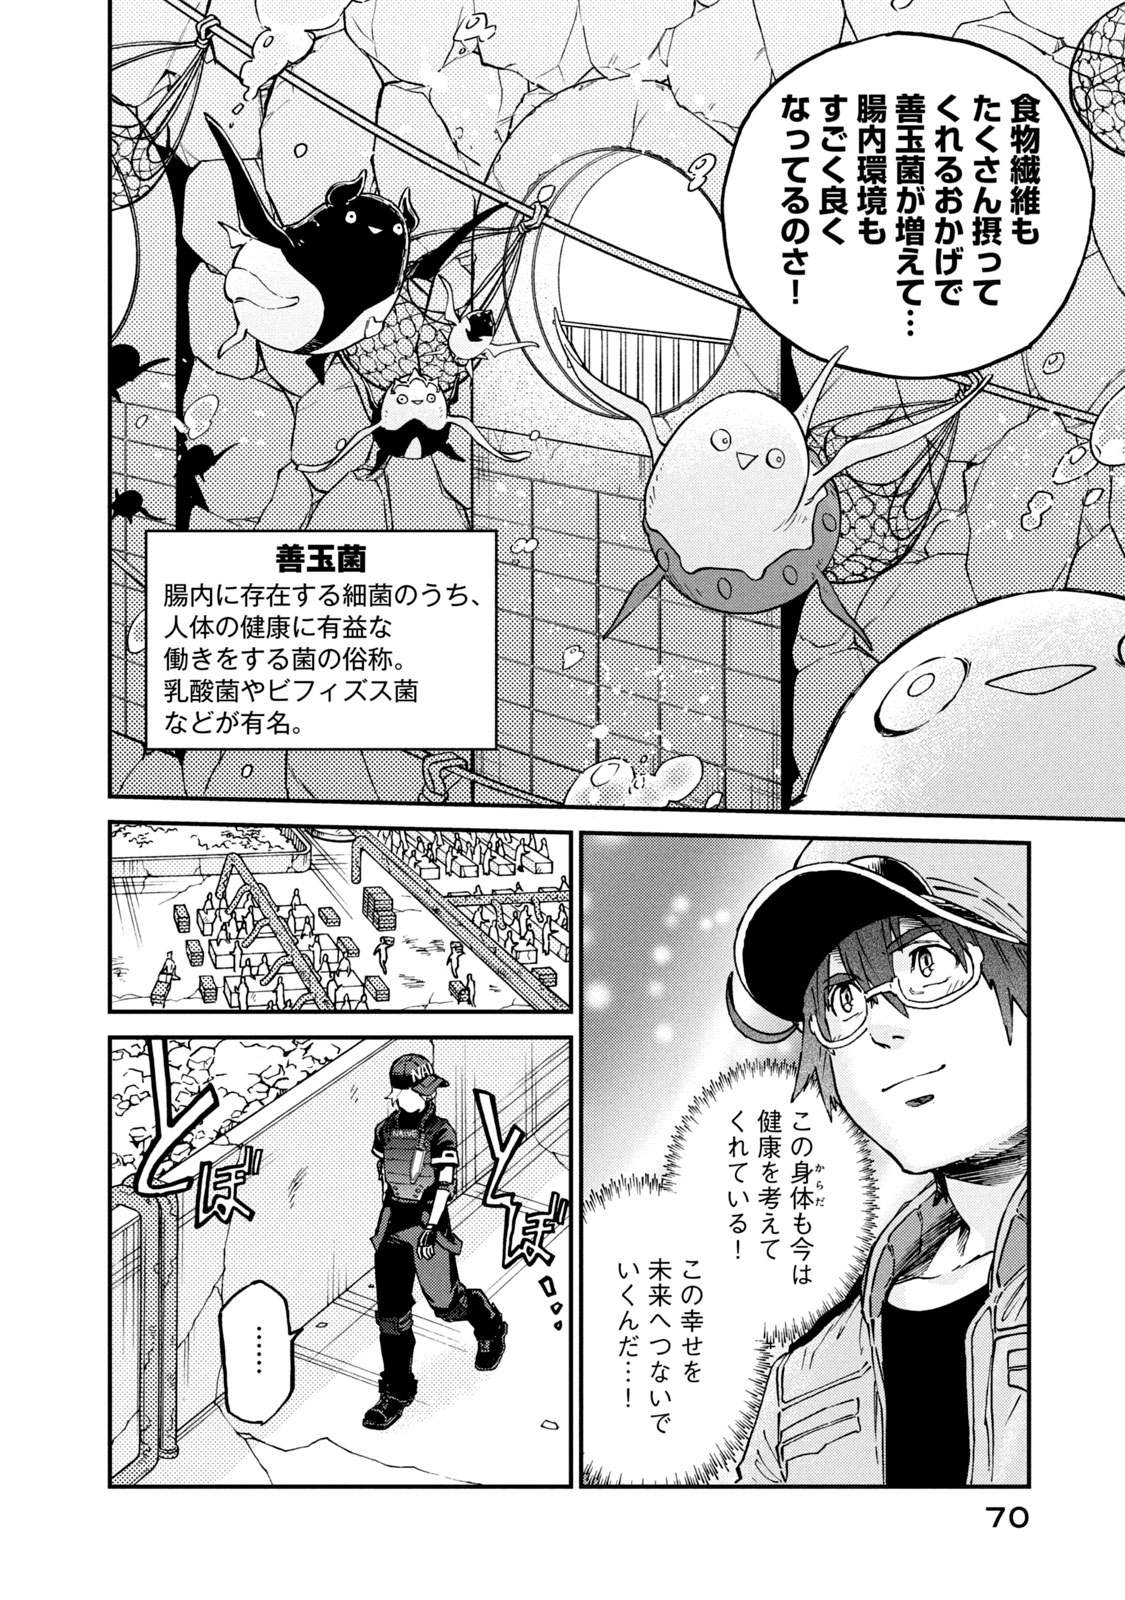 Hataraku Saibou BLACK - Chapter 45 - Page 6